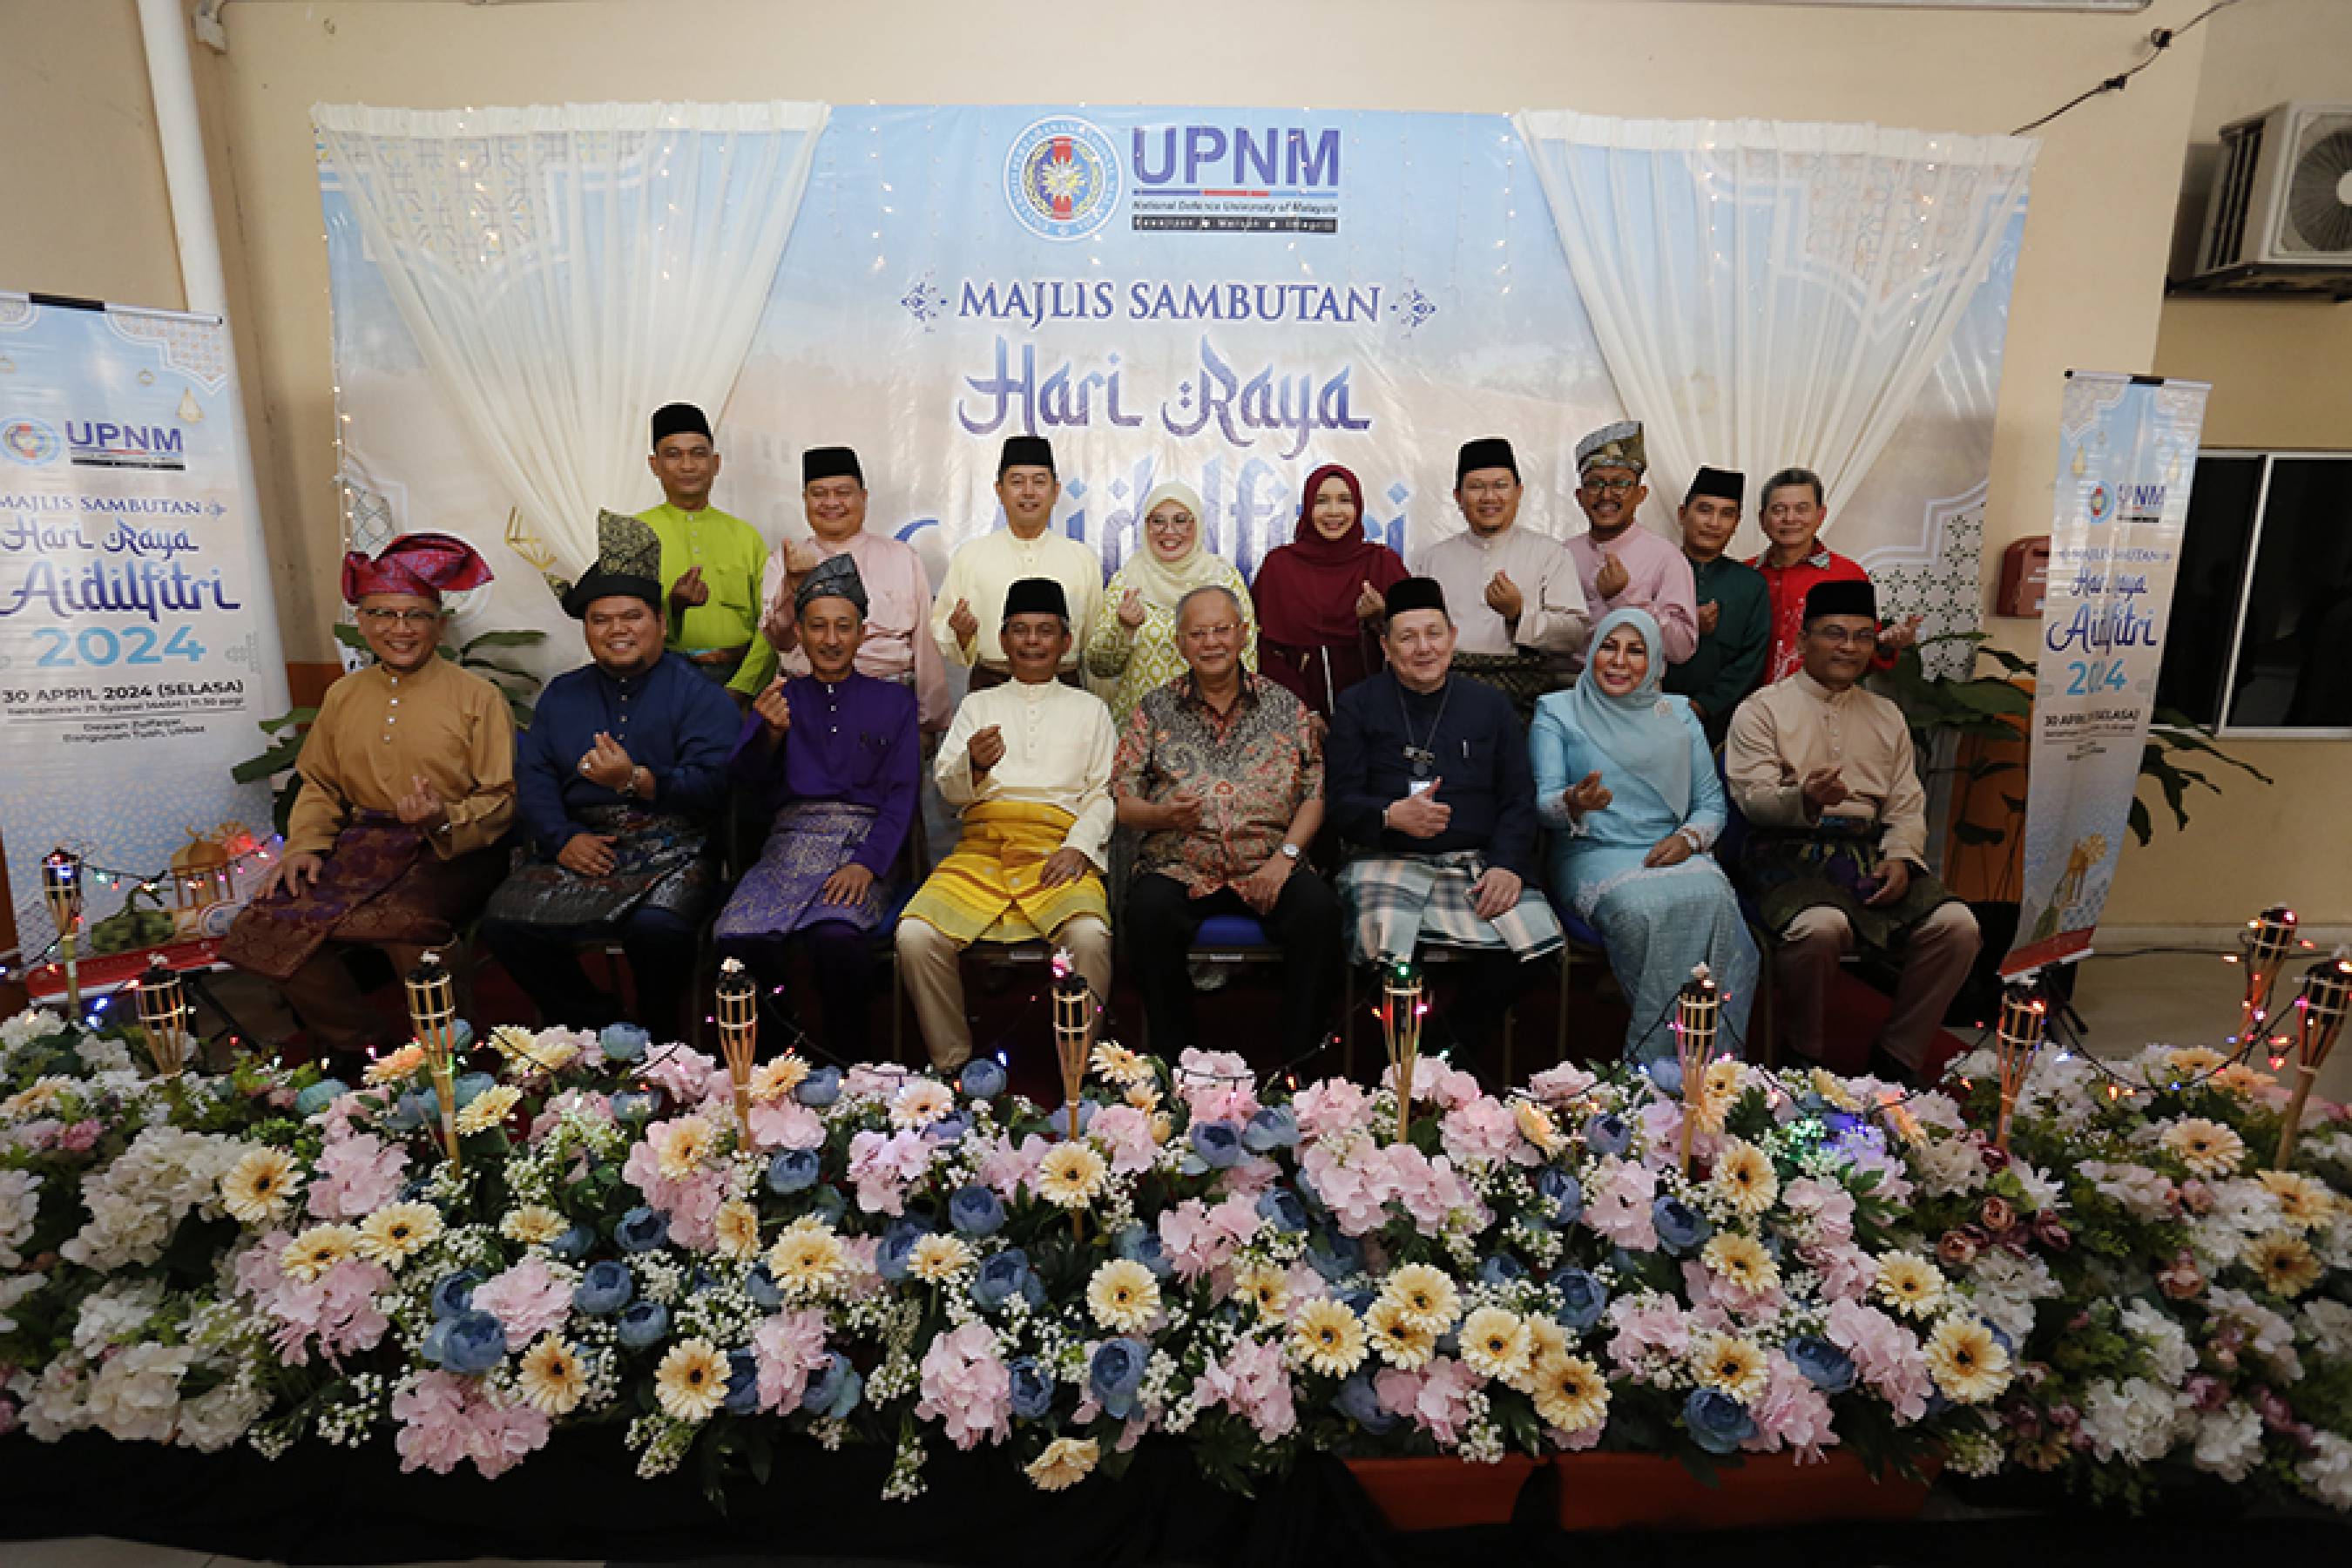 Majlis Sambutan Hari Raya Aidilfitri UPNM